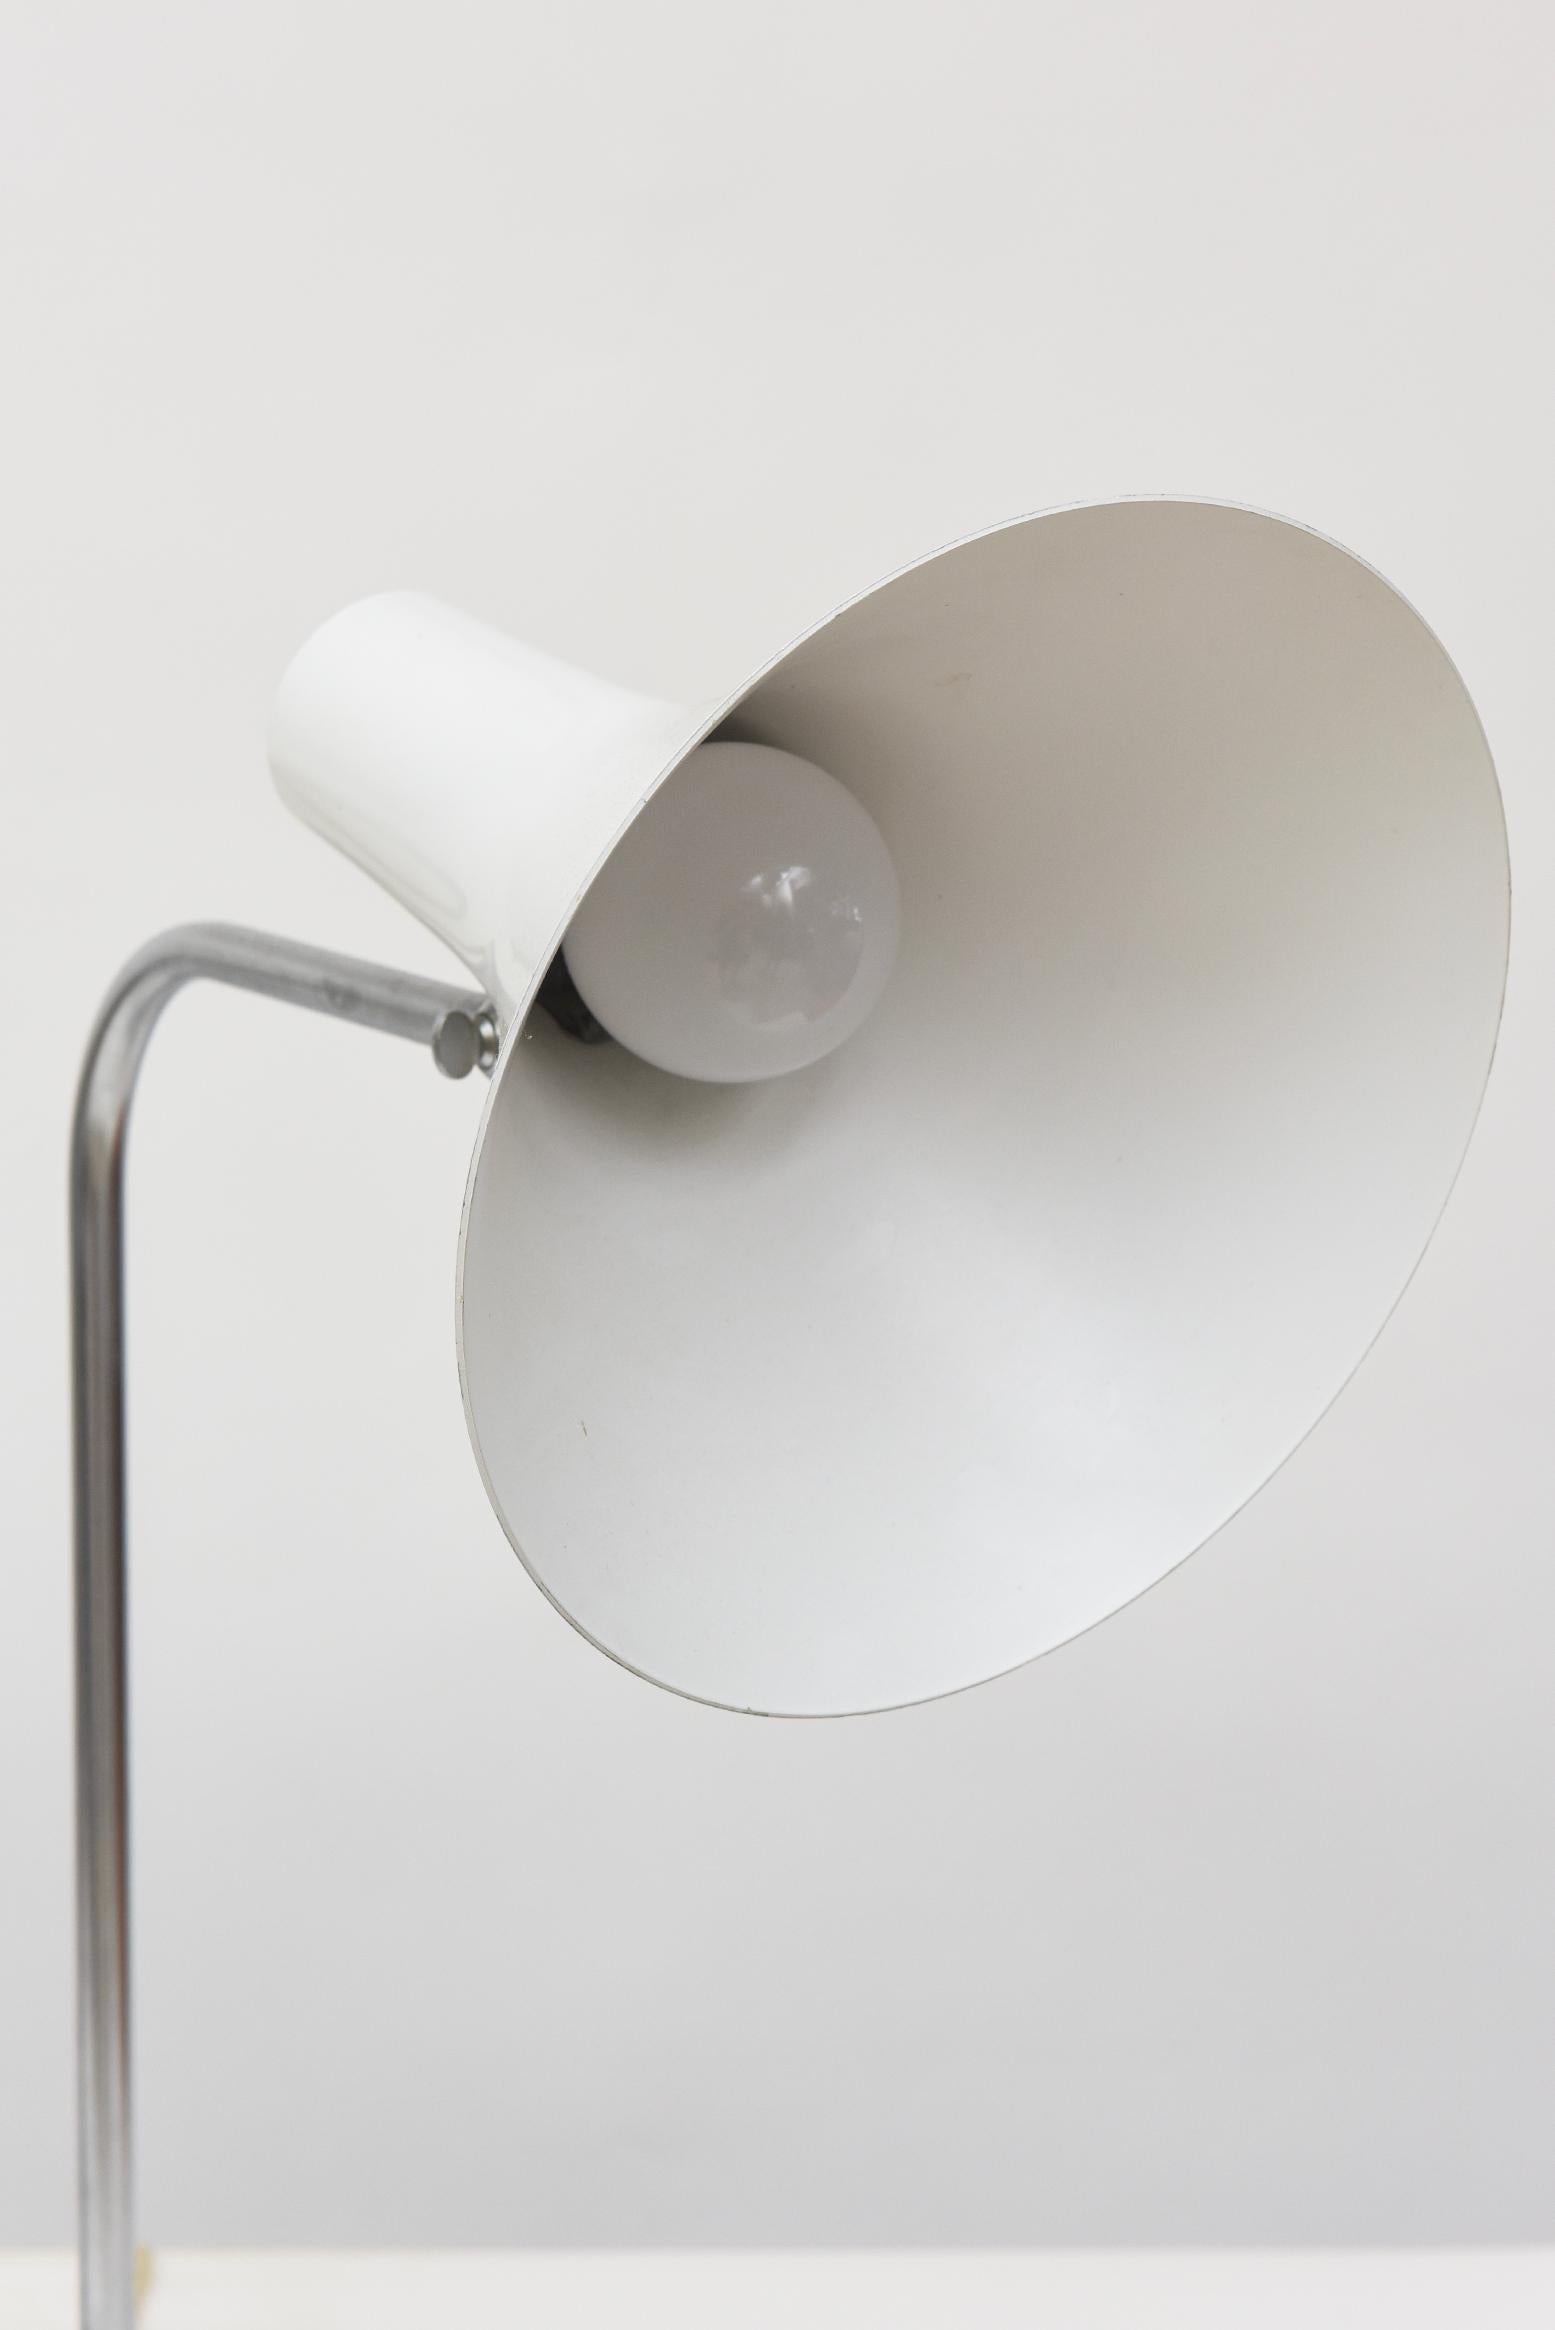 1960s Double Desk Lamp by Greta Von Nessen for Nessen Studio 1